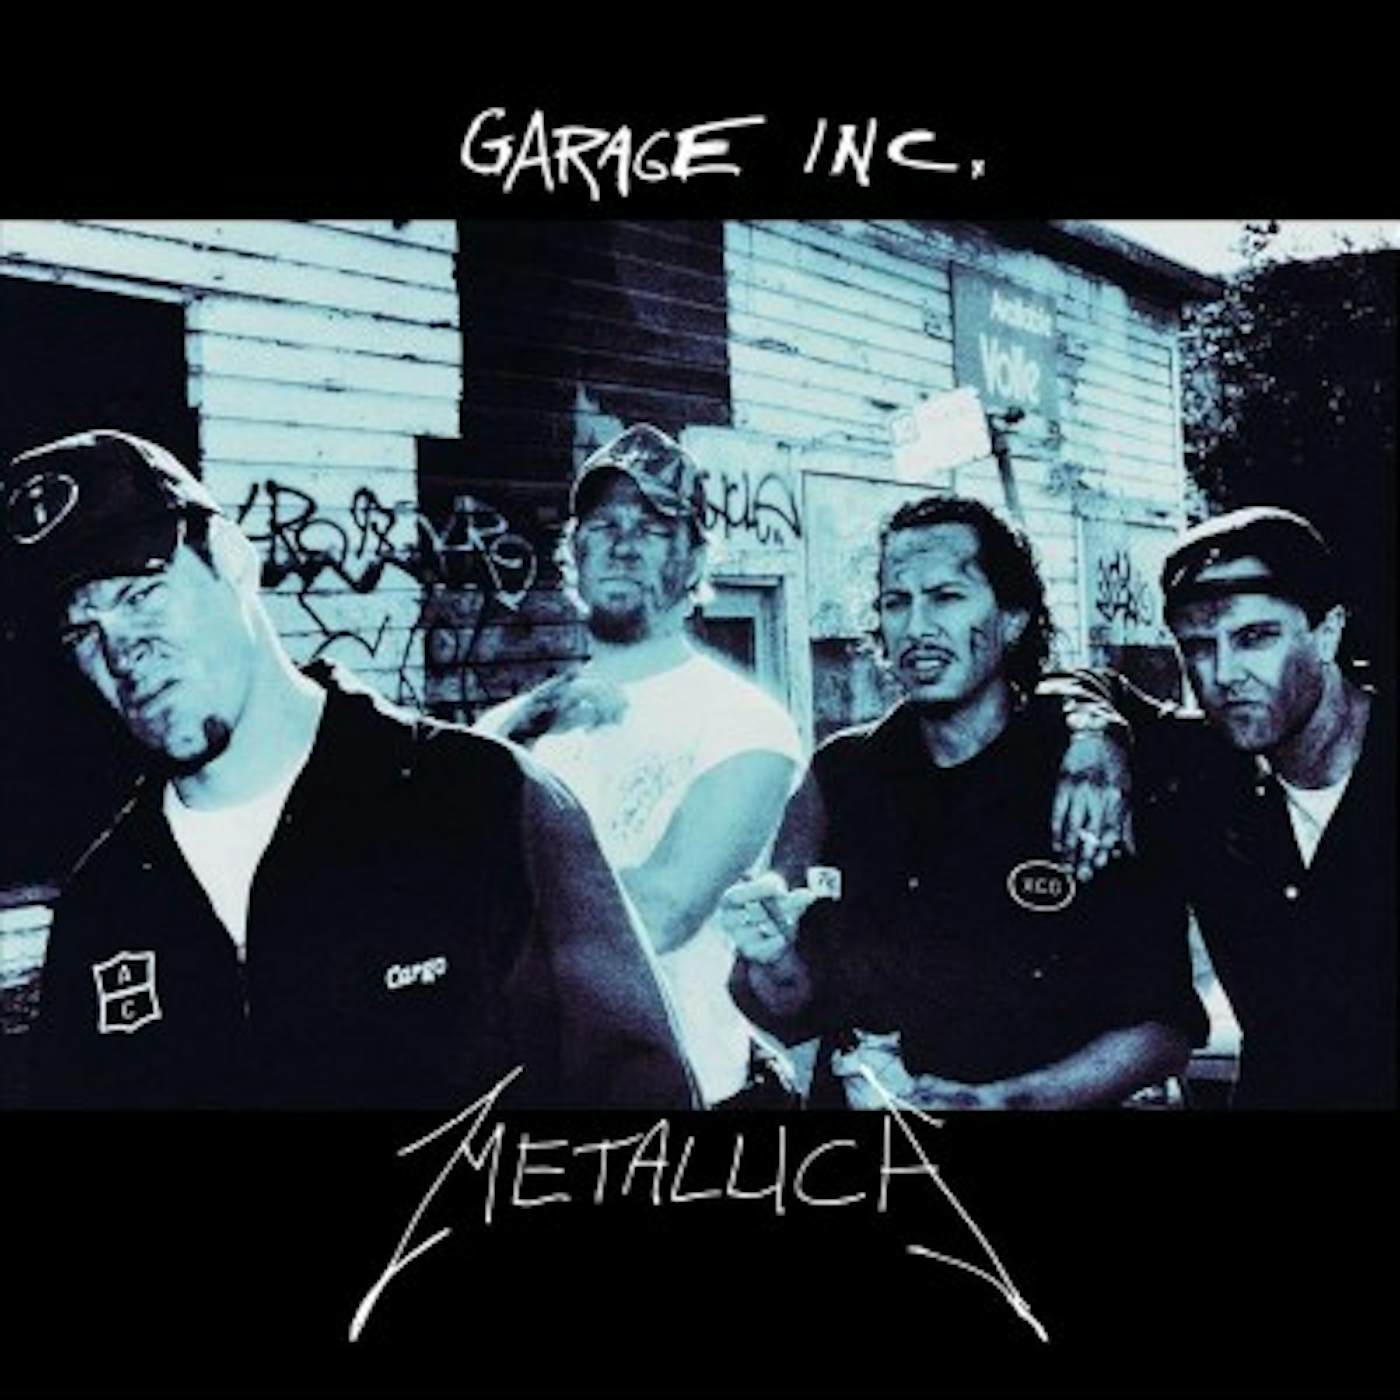 Metallica Garage Inc. Vinyl Record